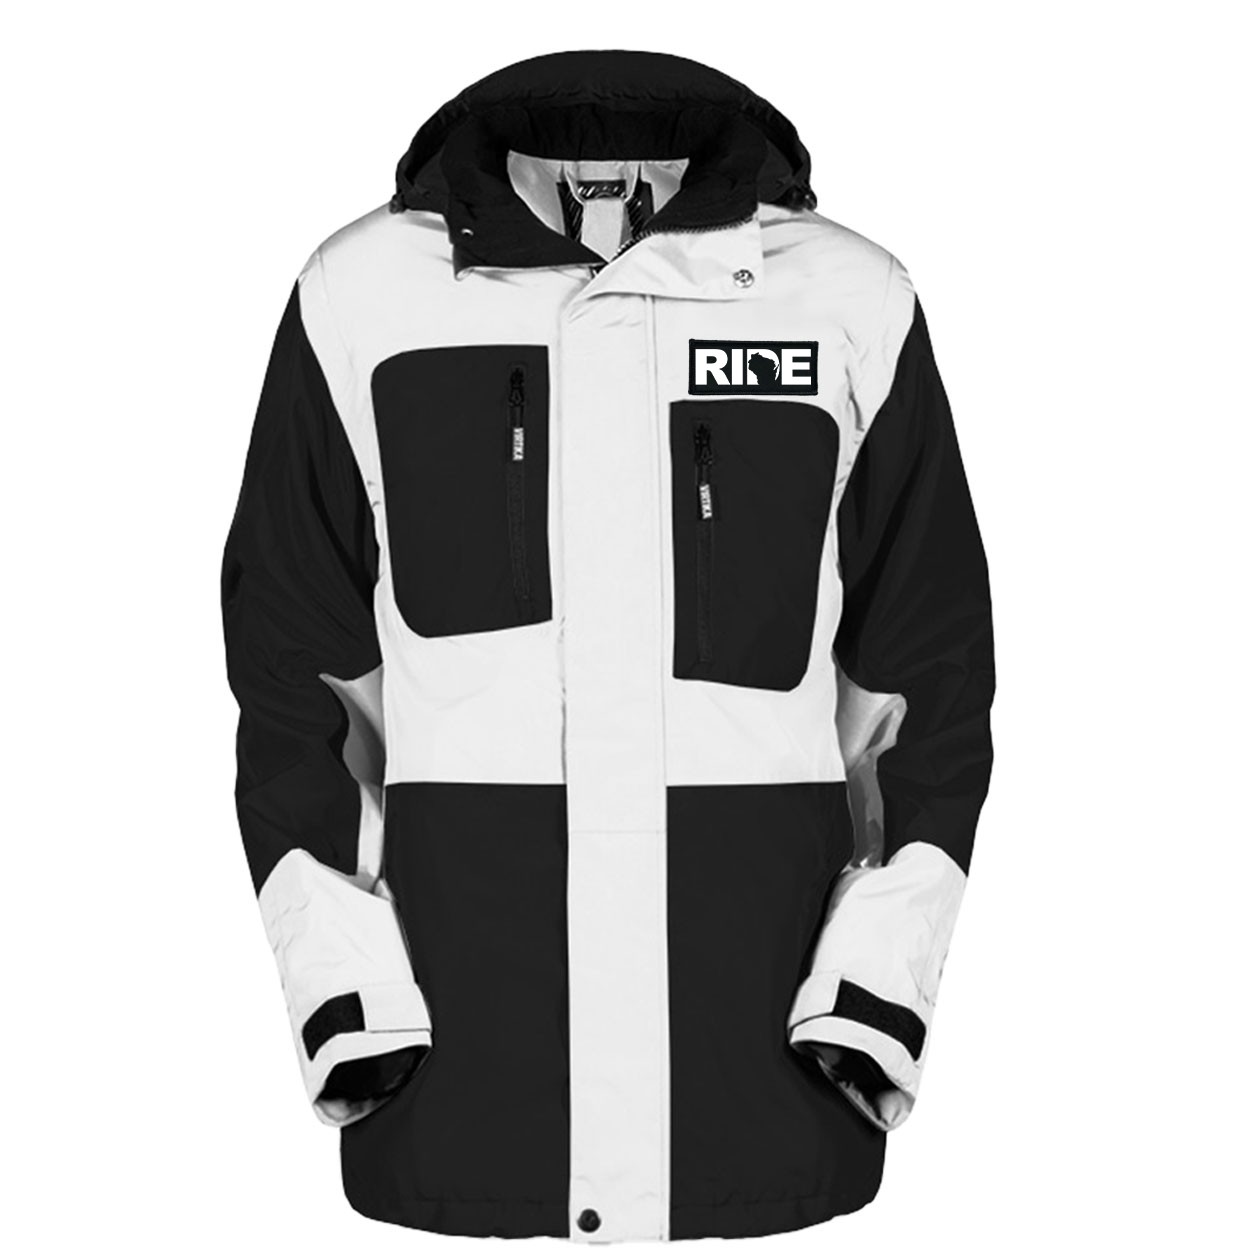 Ride Wisconsin Pro Waterproof Breathable Winter Virtika Jacket Black/White (White Logo)